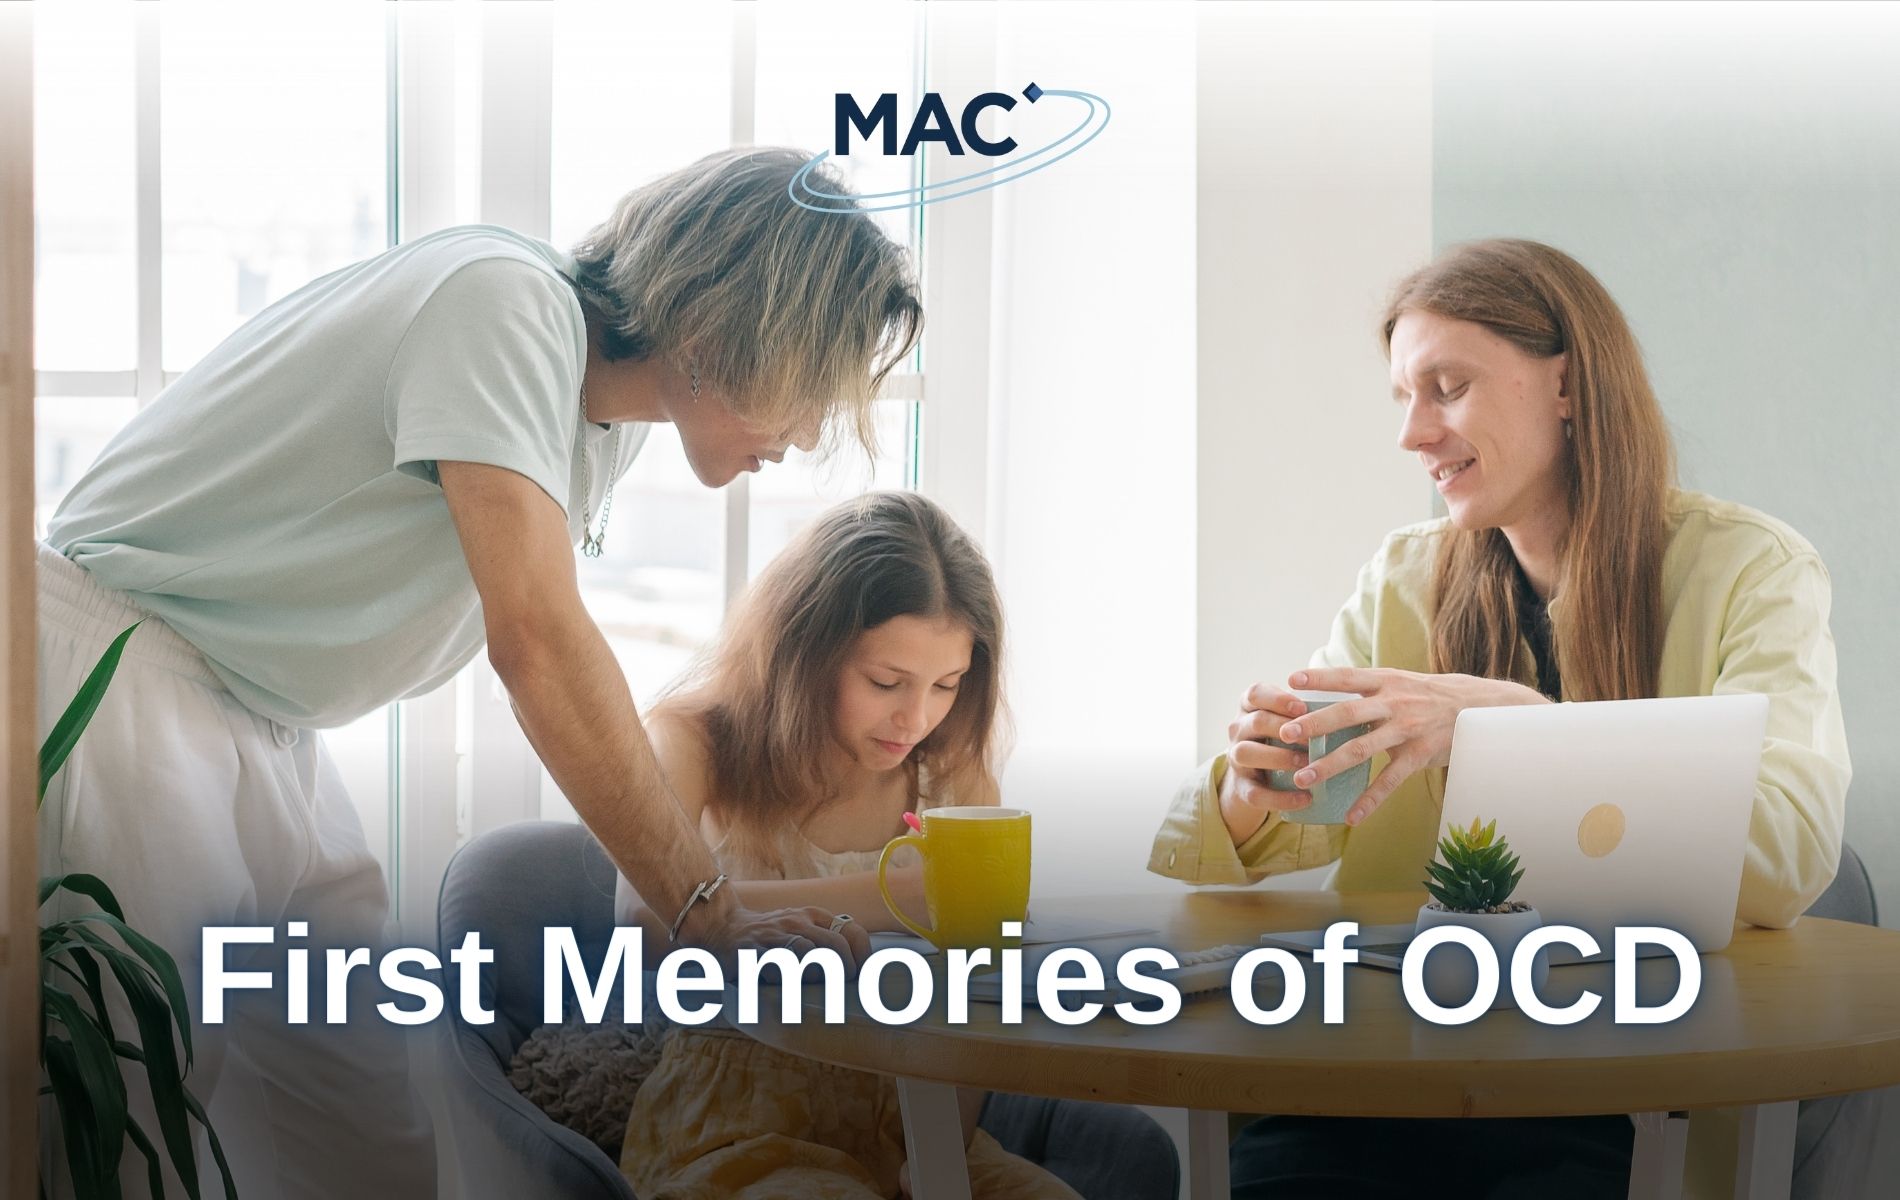 First memories of ocd